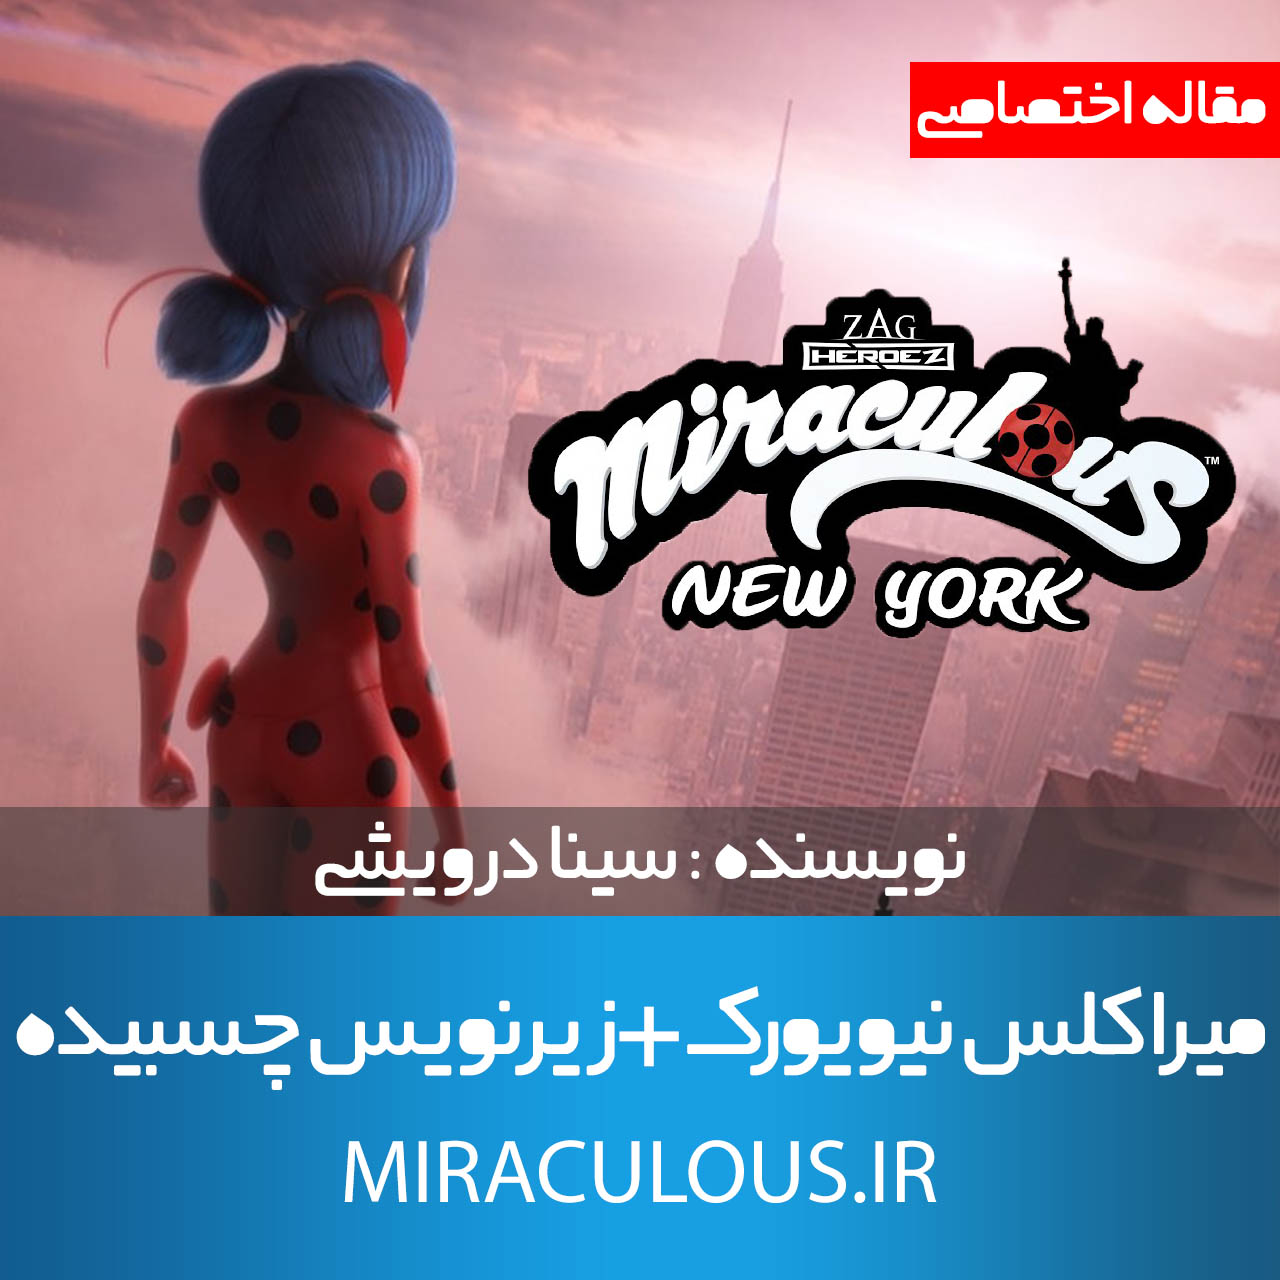 دانلود انیمیشن سینمایی میراکلس لیدی باگ نیویورک Miraculous World: New York, United Heroez با زیرنویس فارسی چسبیده